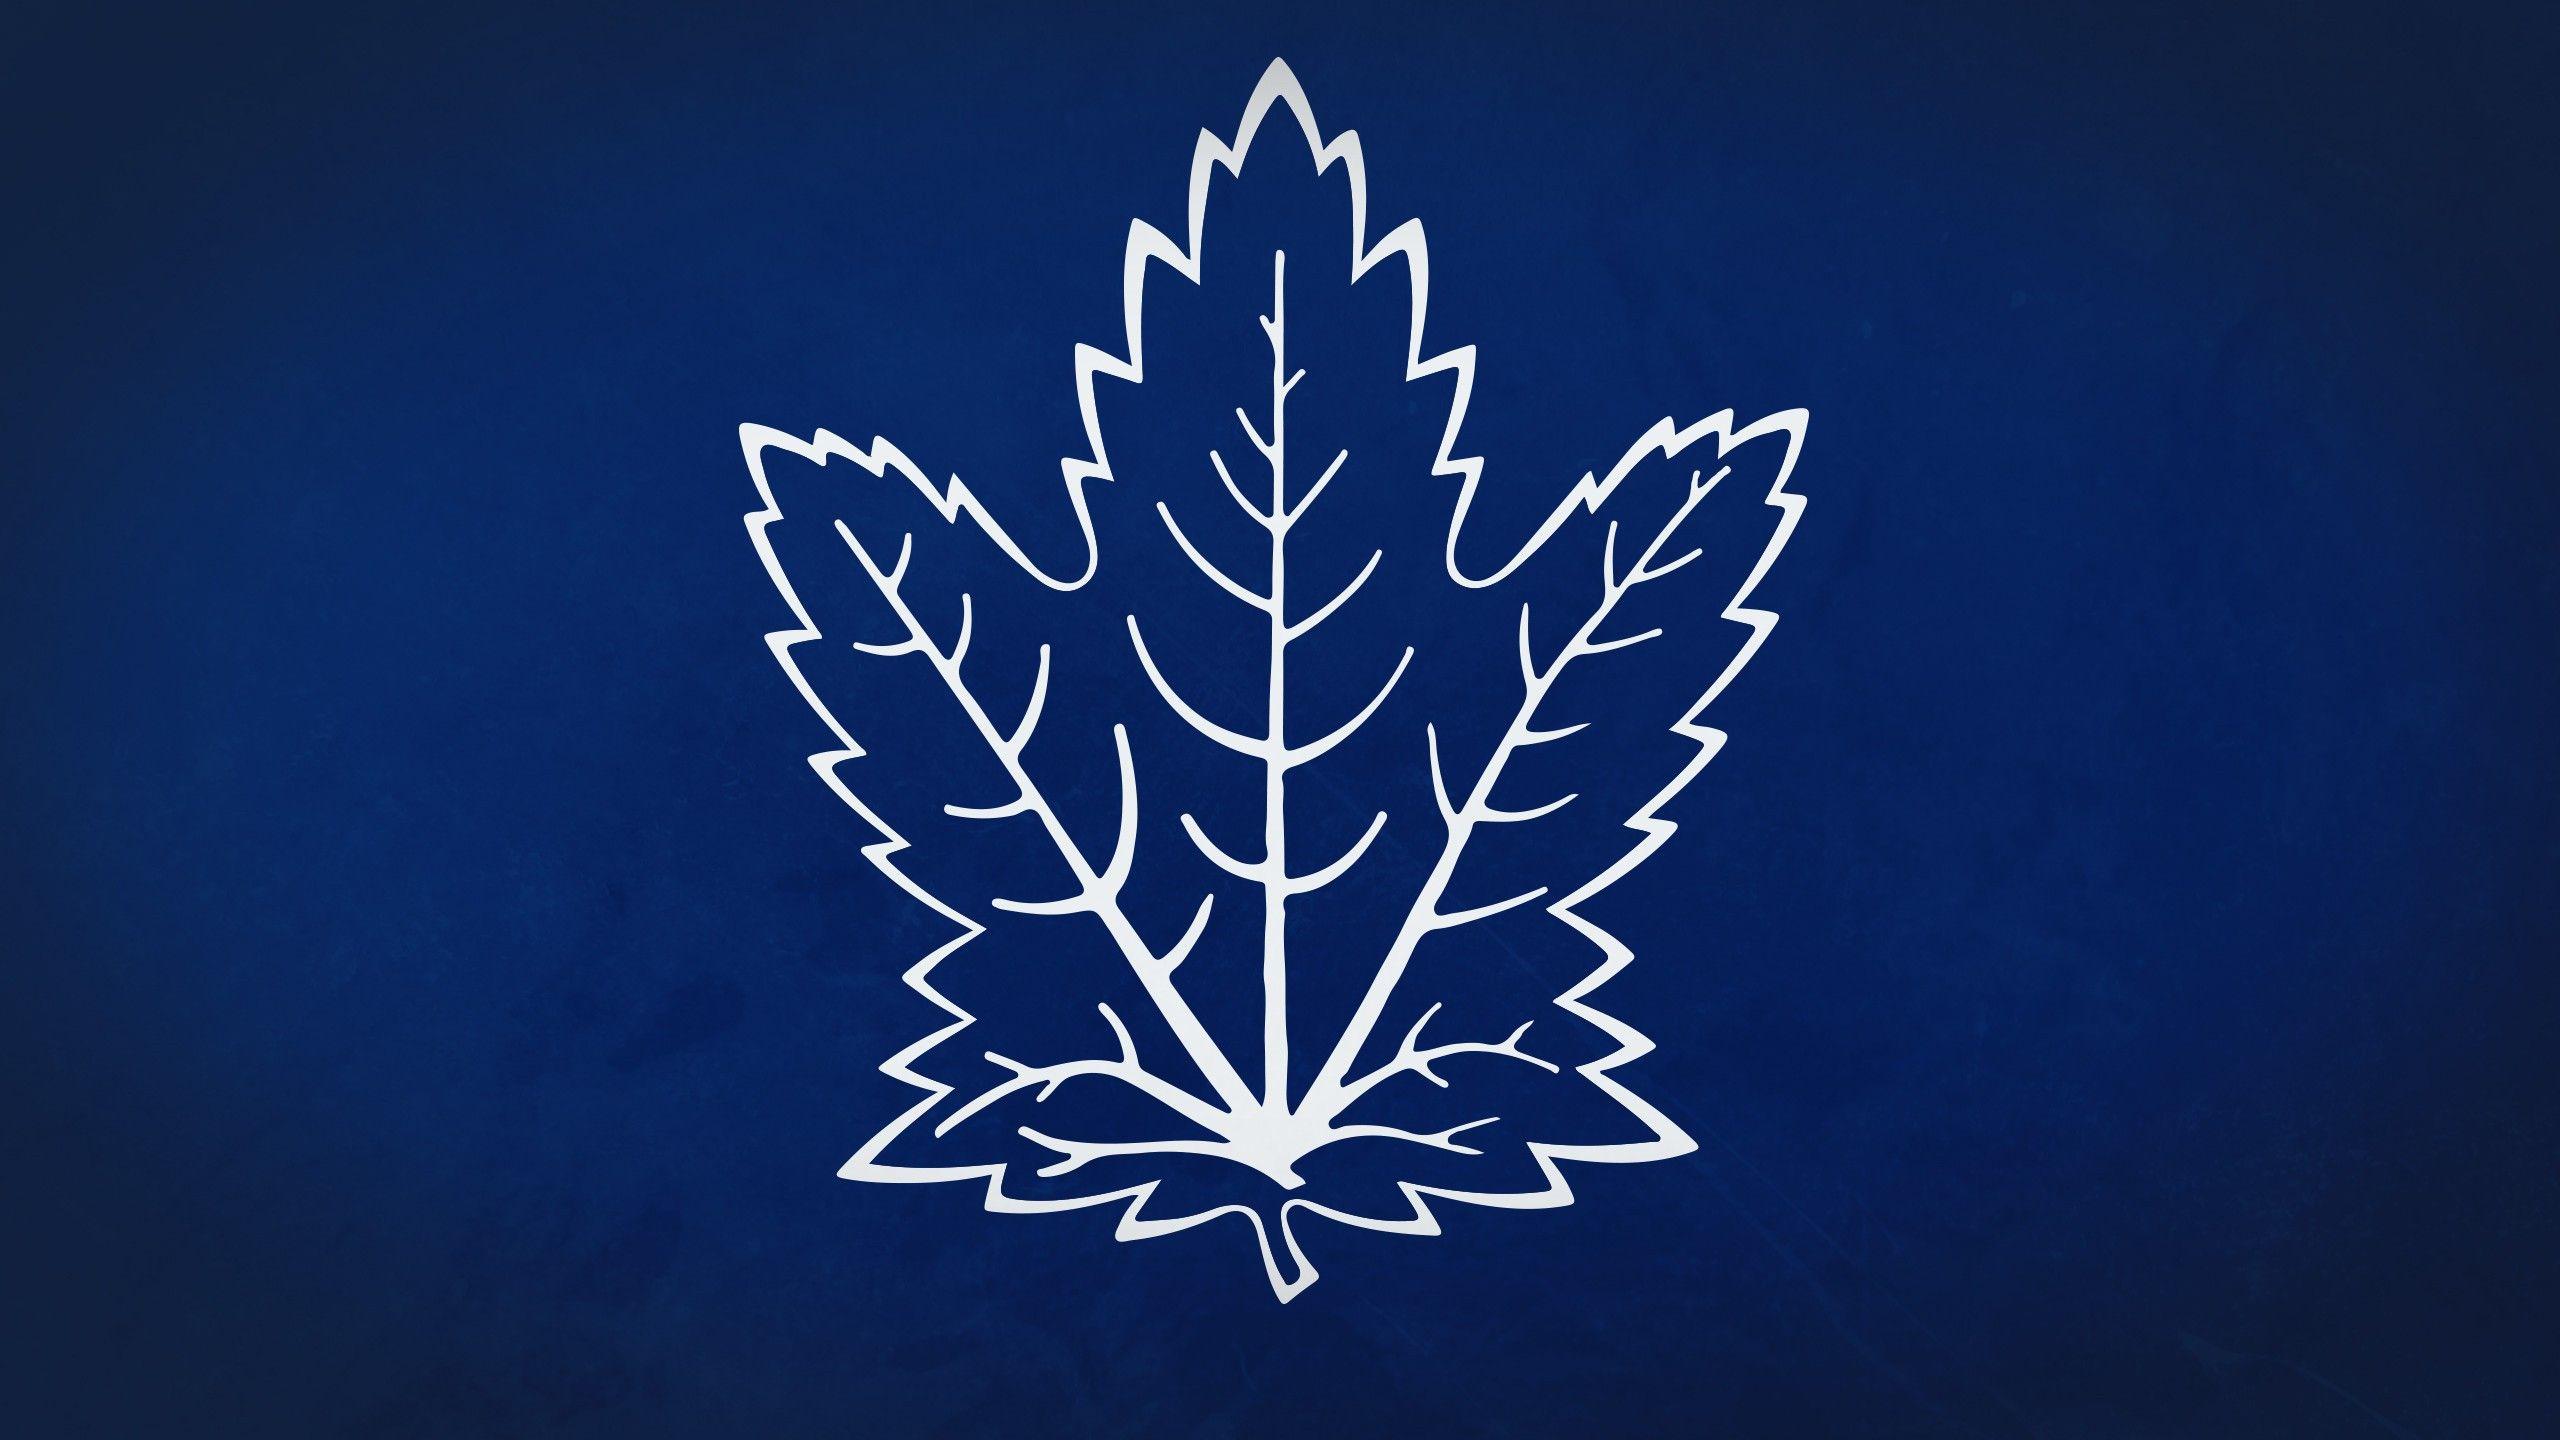 Toronto Maple Leafs Wallpaper. Toronto Maple Leafs Background